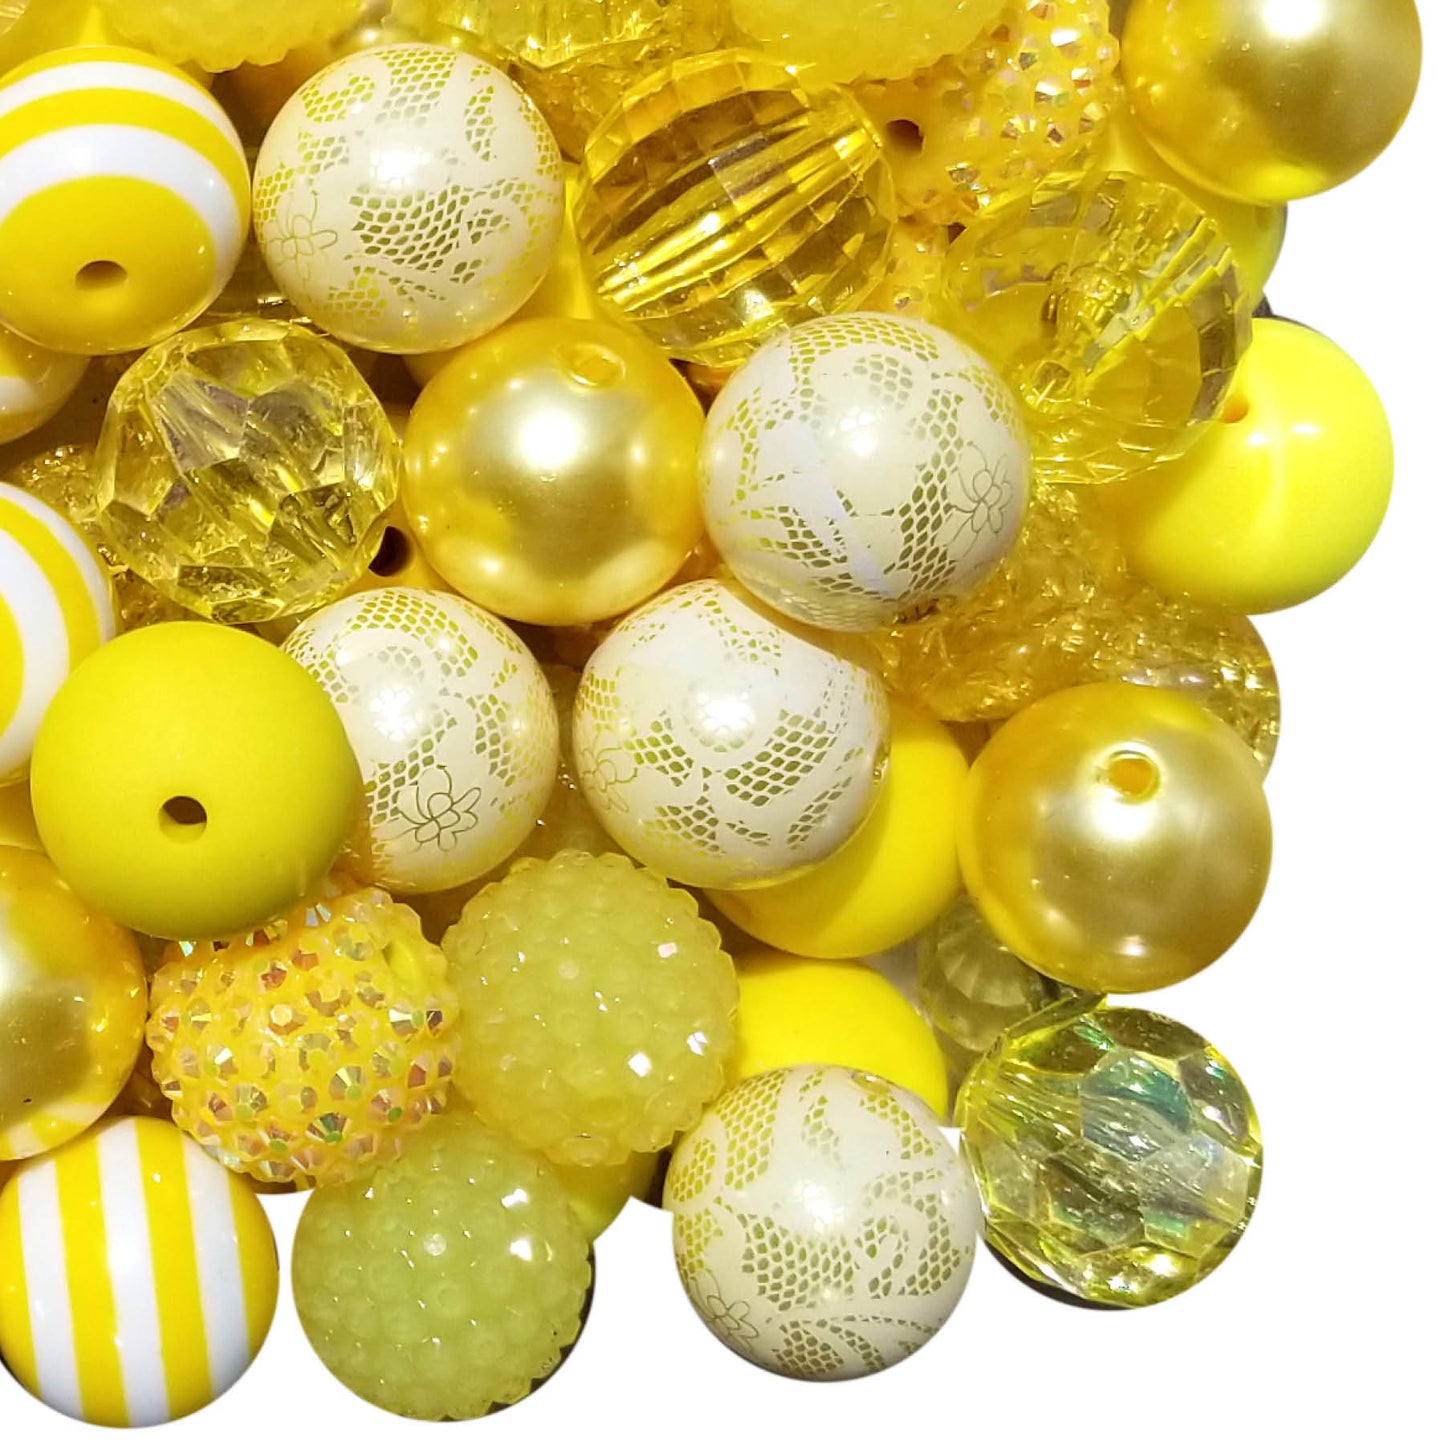 yellow mixed 20mm bubblegum beads